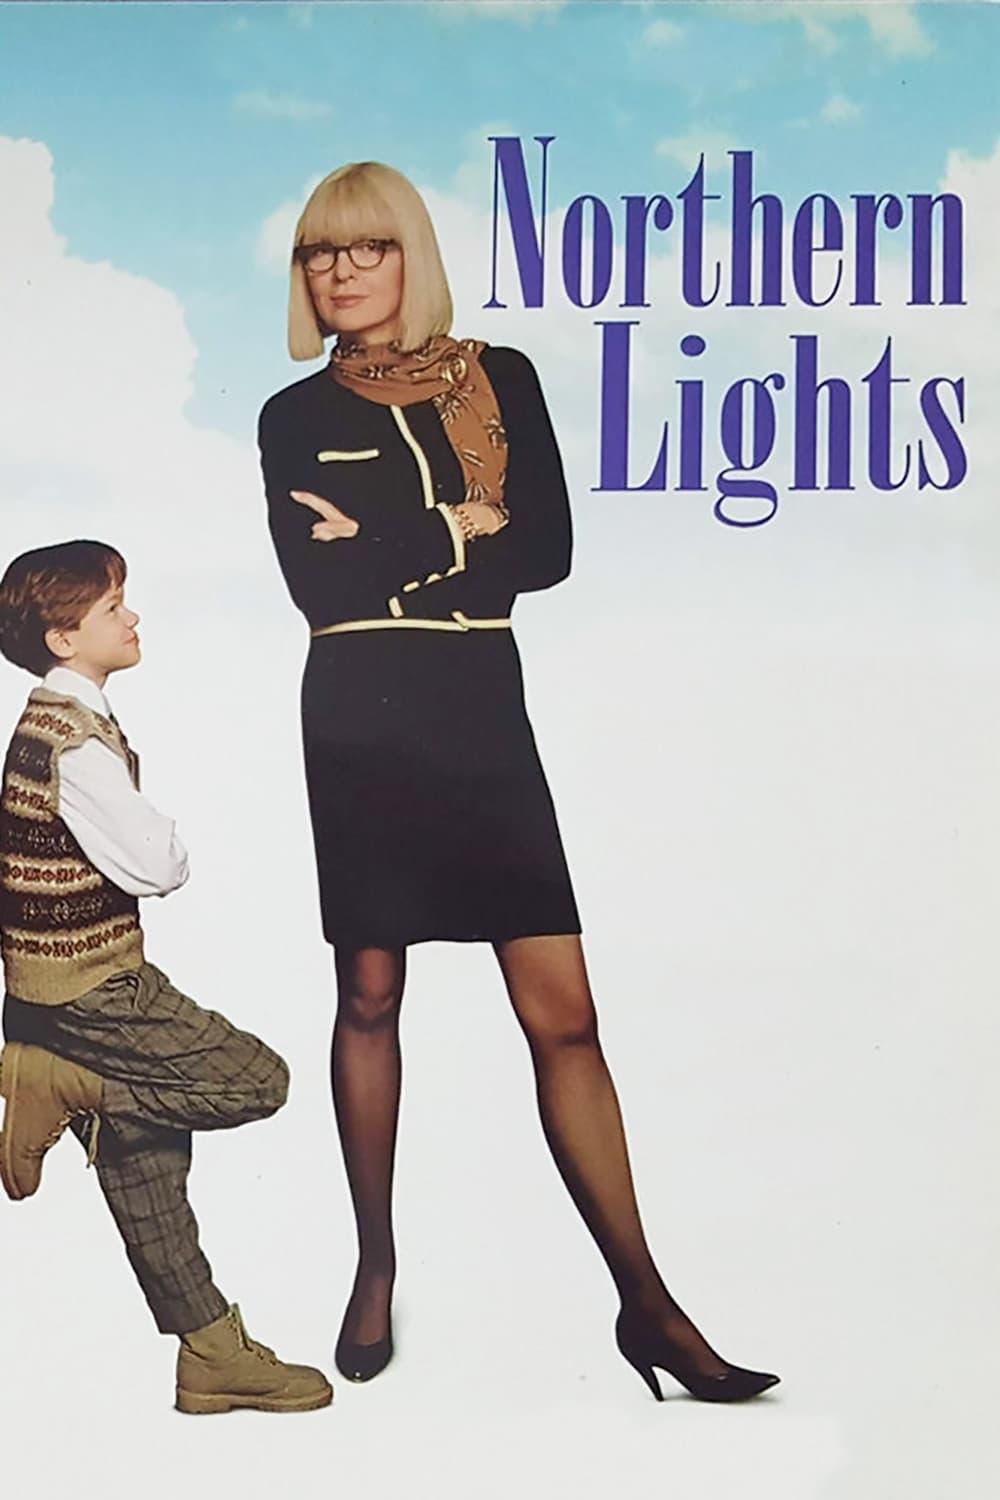 Northern Lights poster